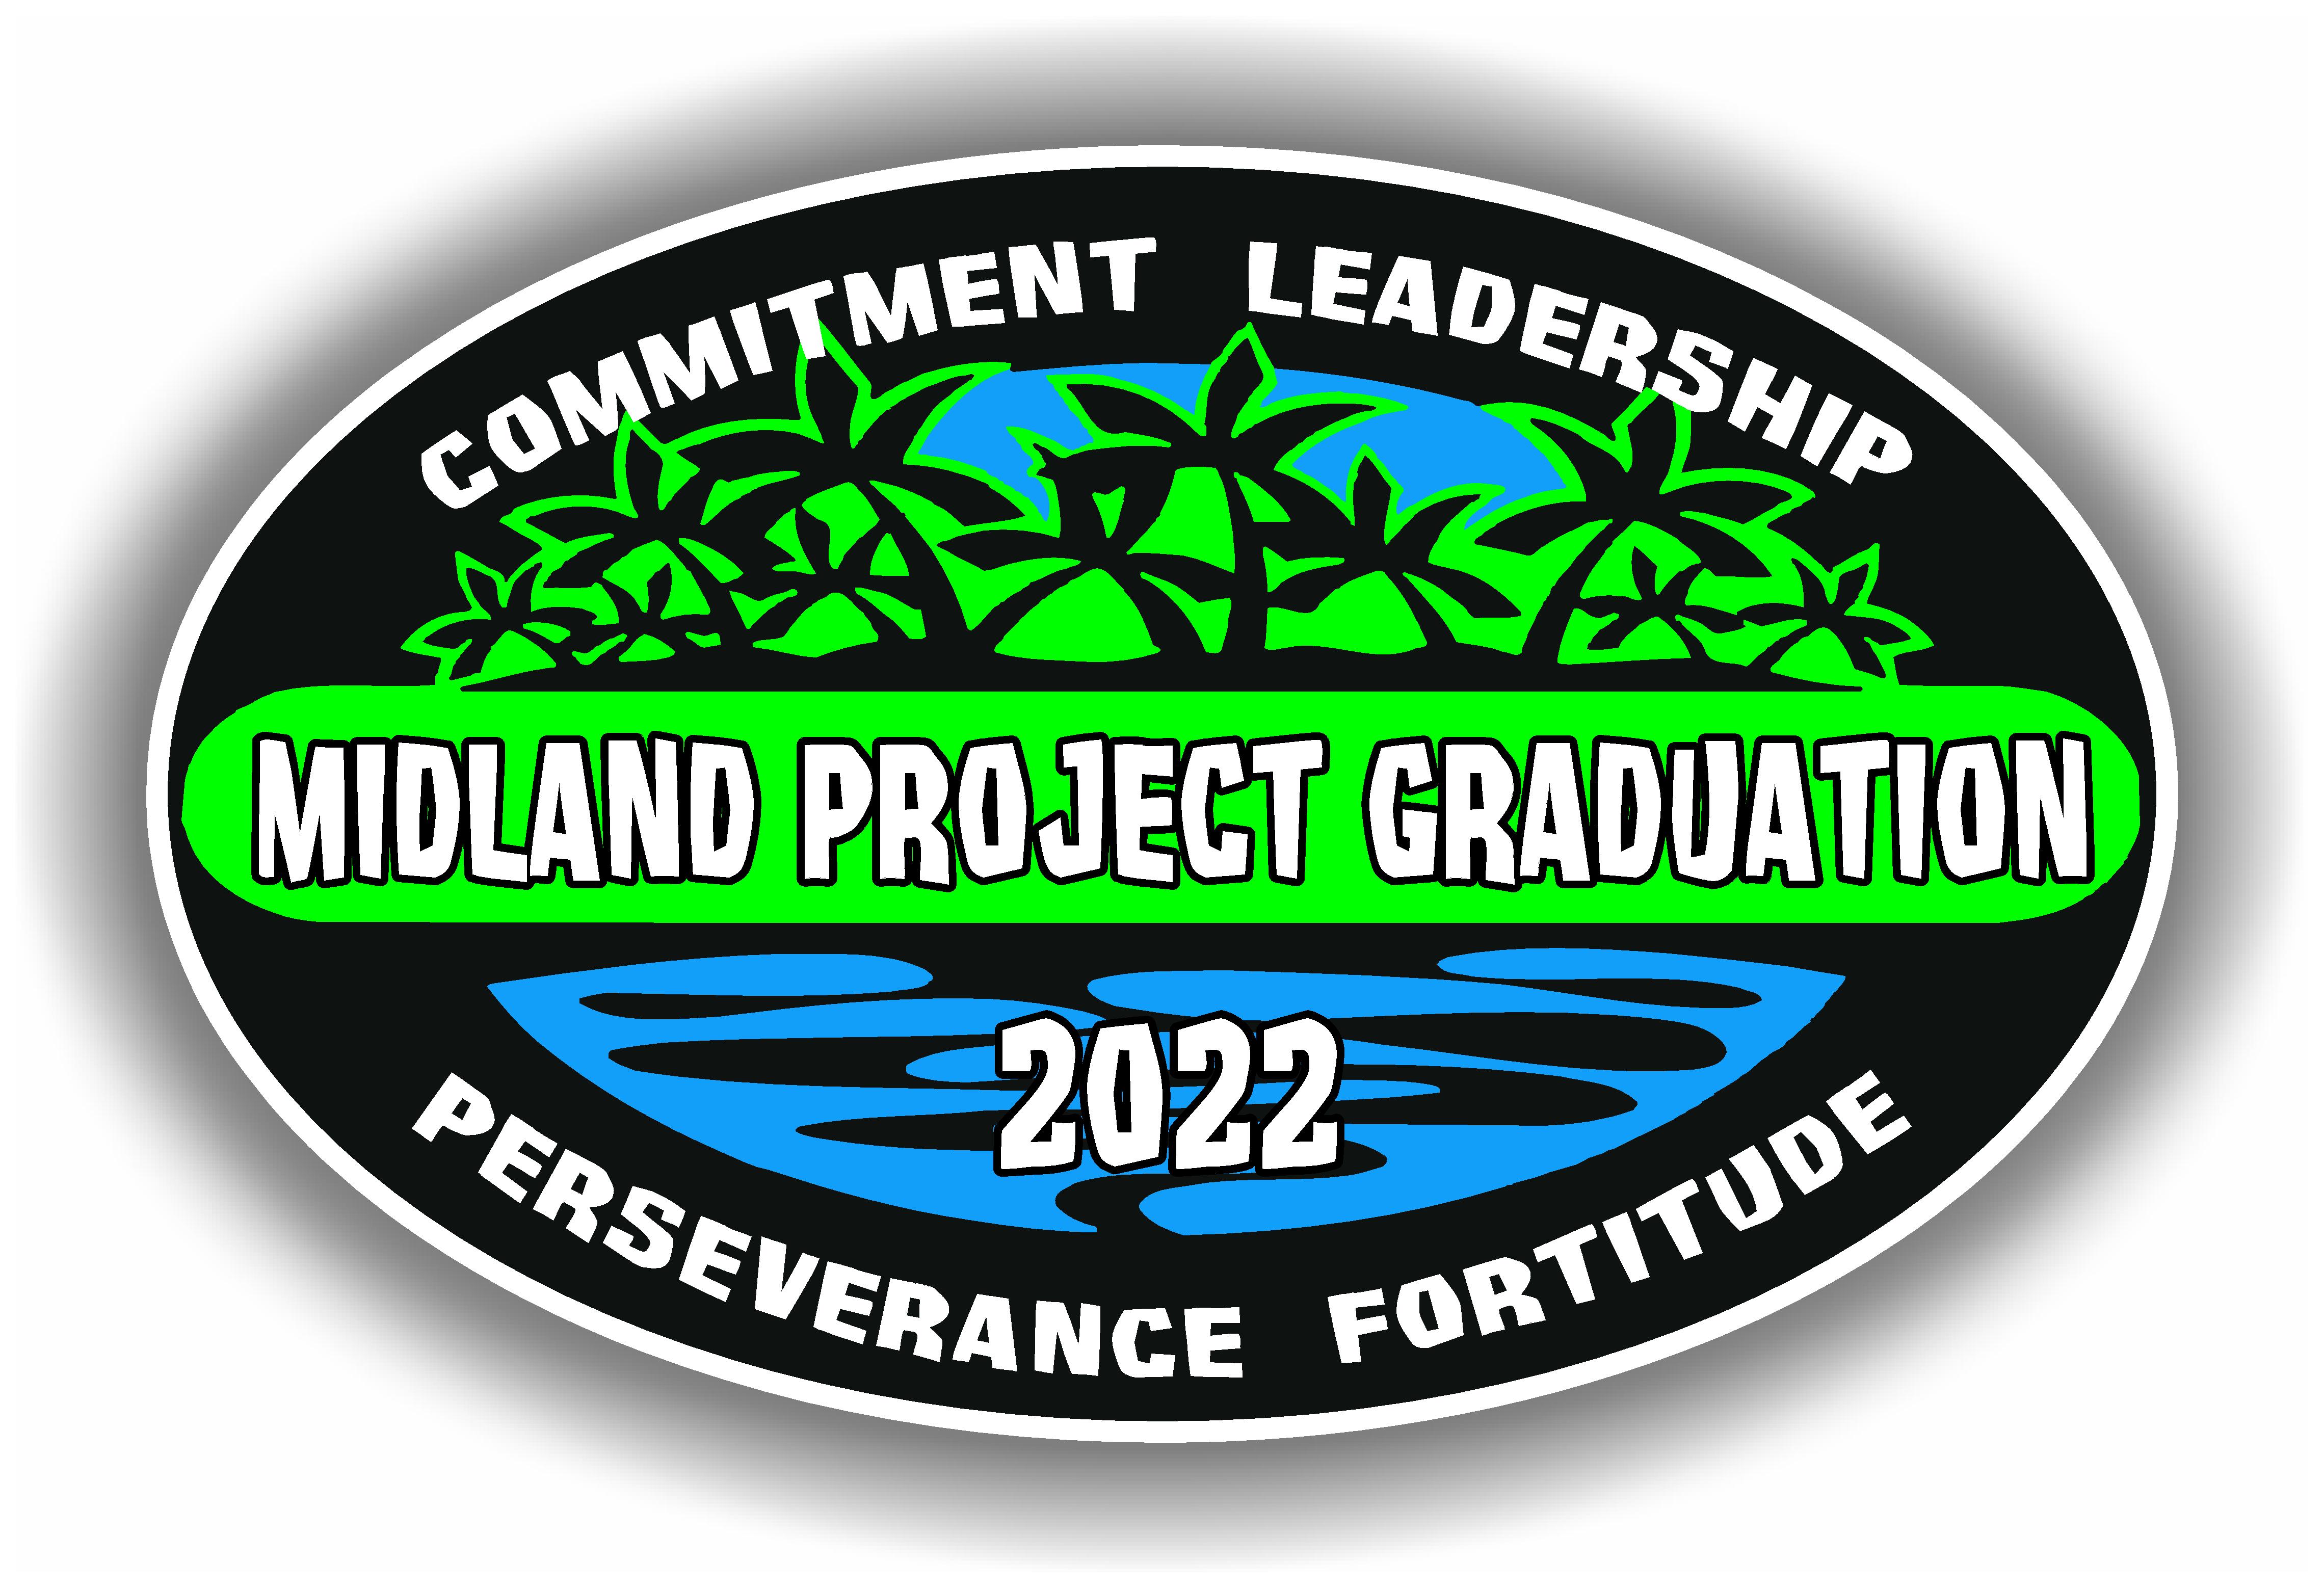 Midland Project Graduation